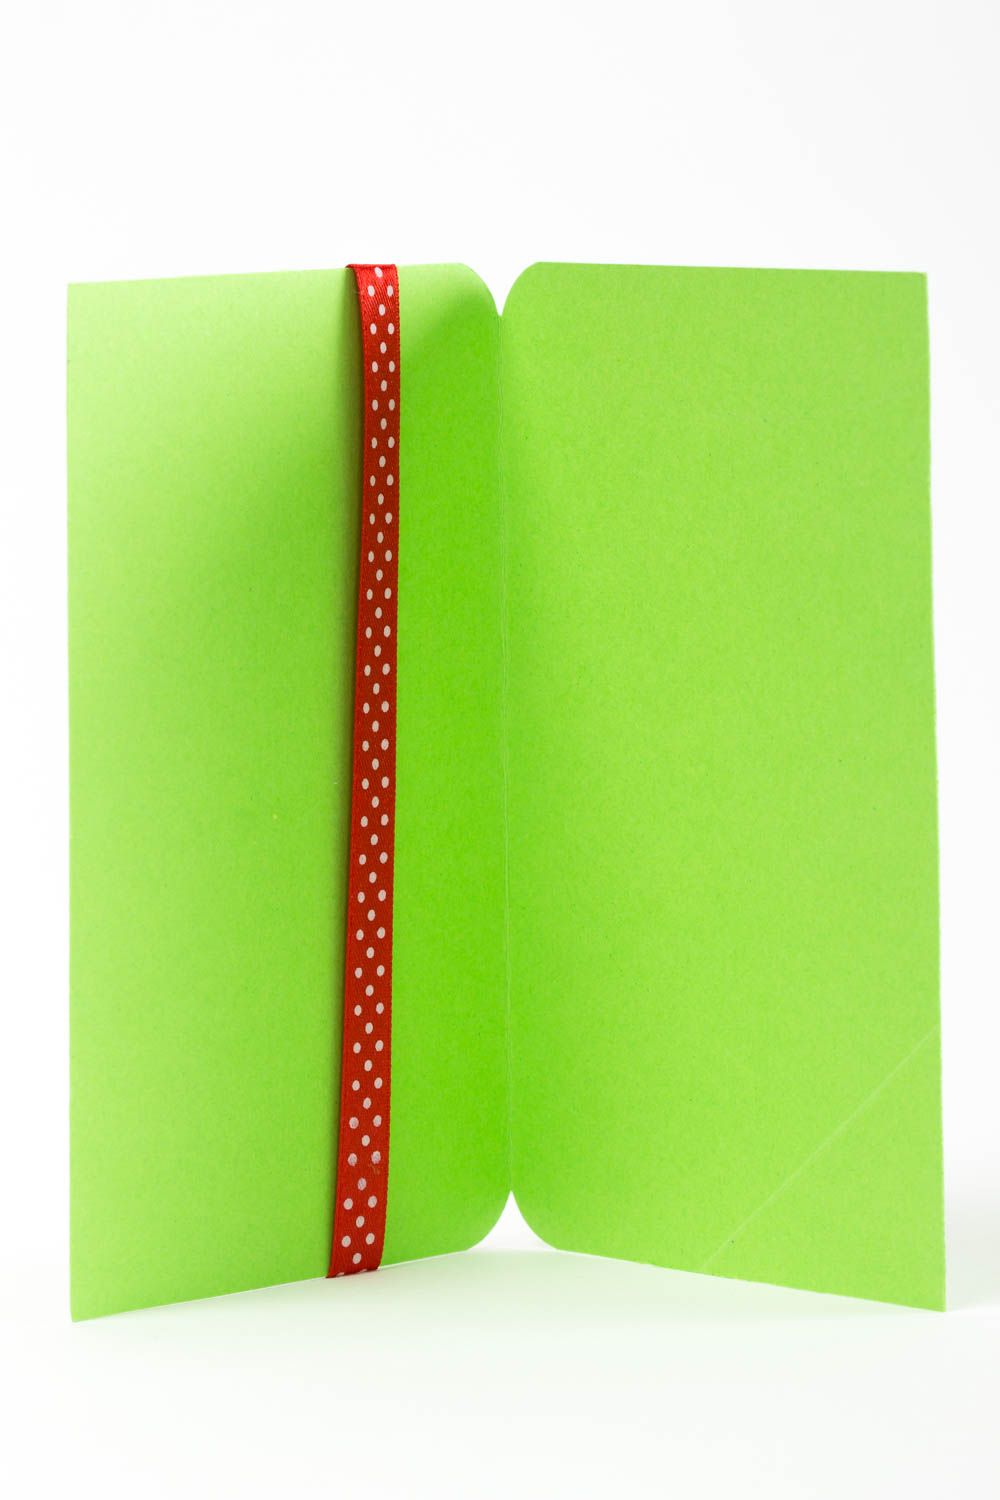 Beautiful handmade greeting cards scrapbooking ideas New Year gift ideas photo 3